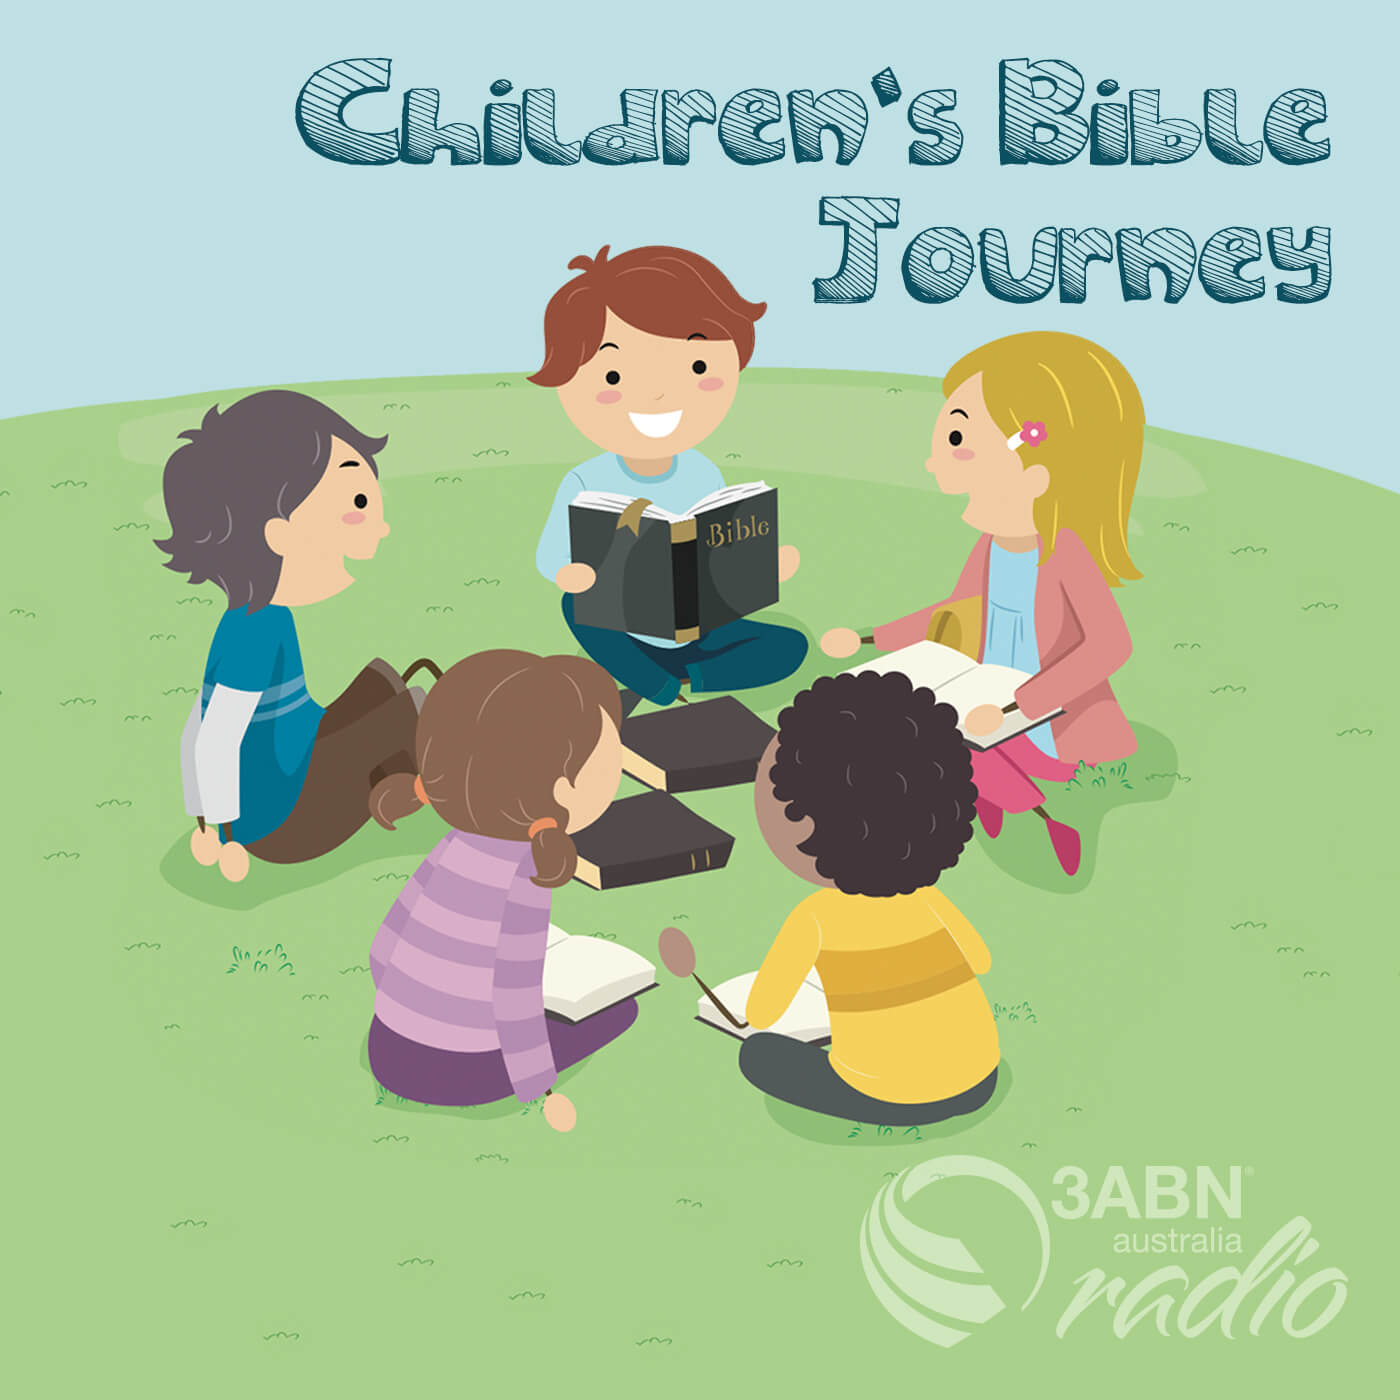 Children's Bible Journey - 2126